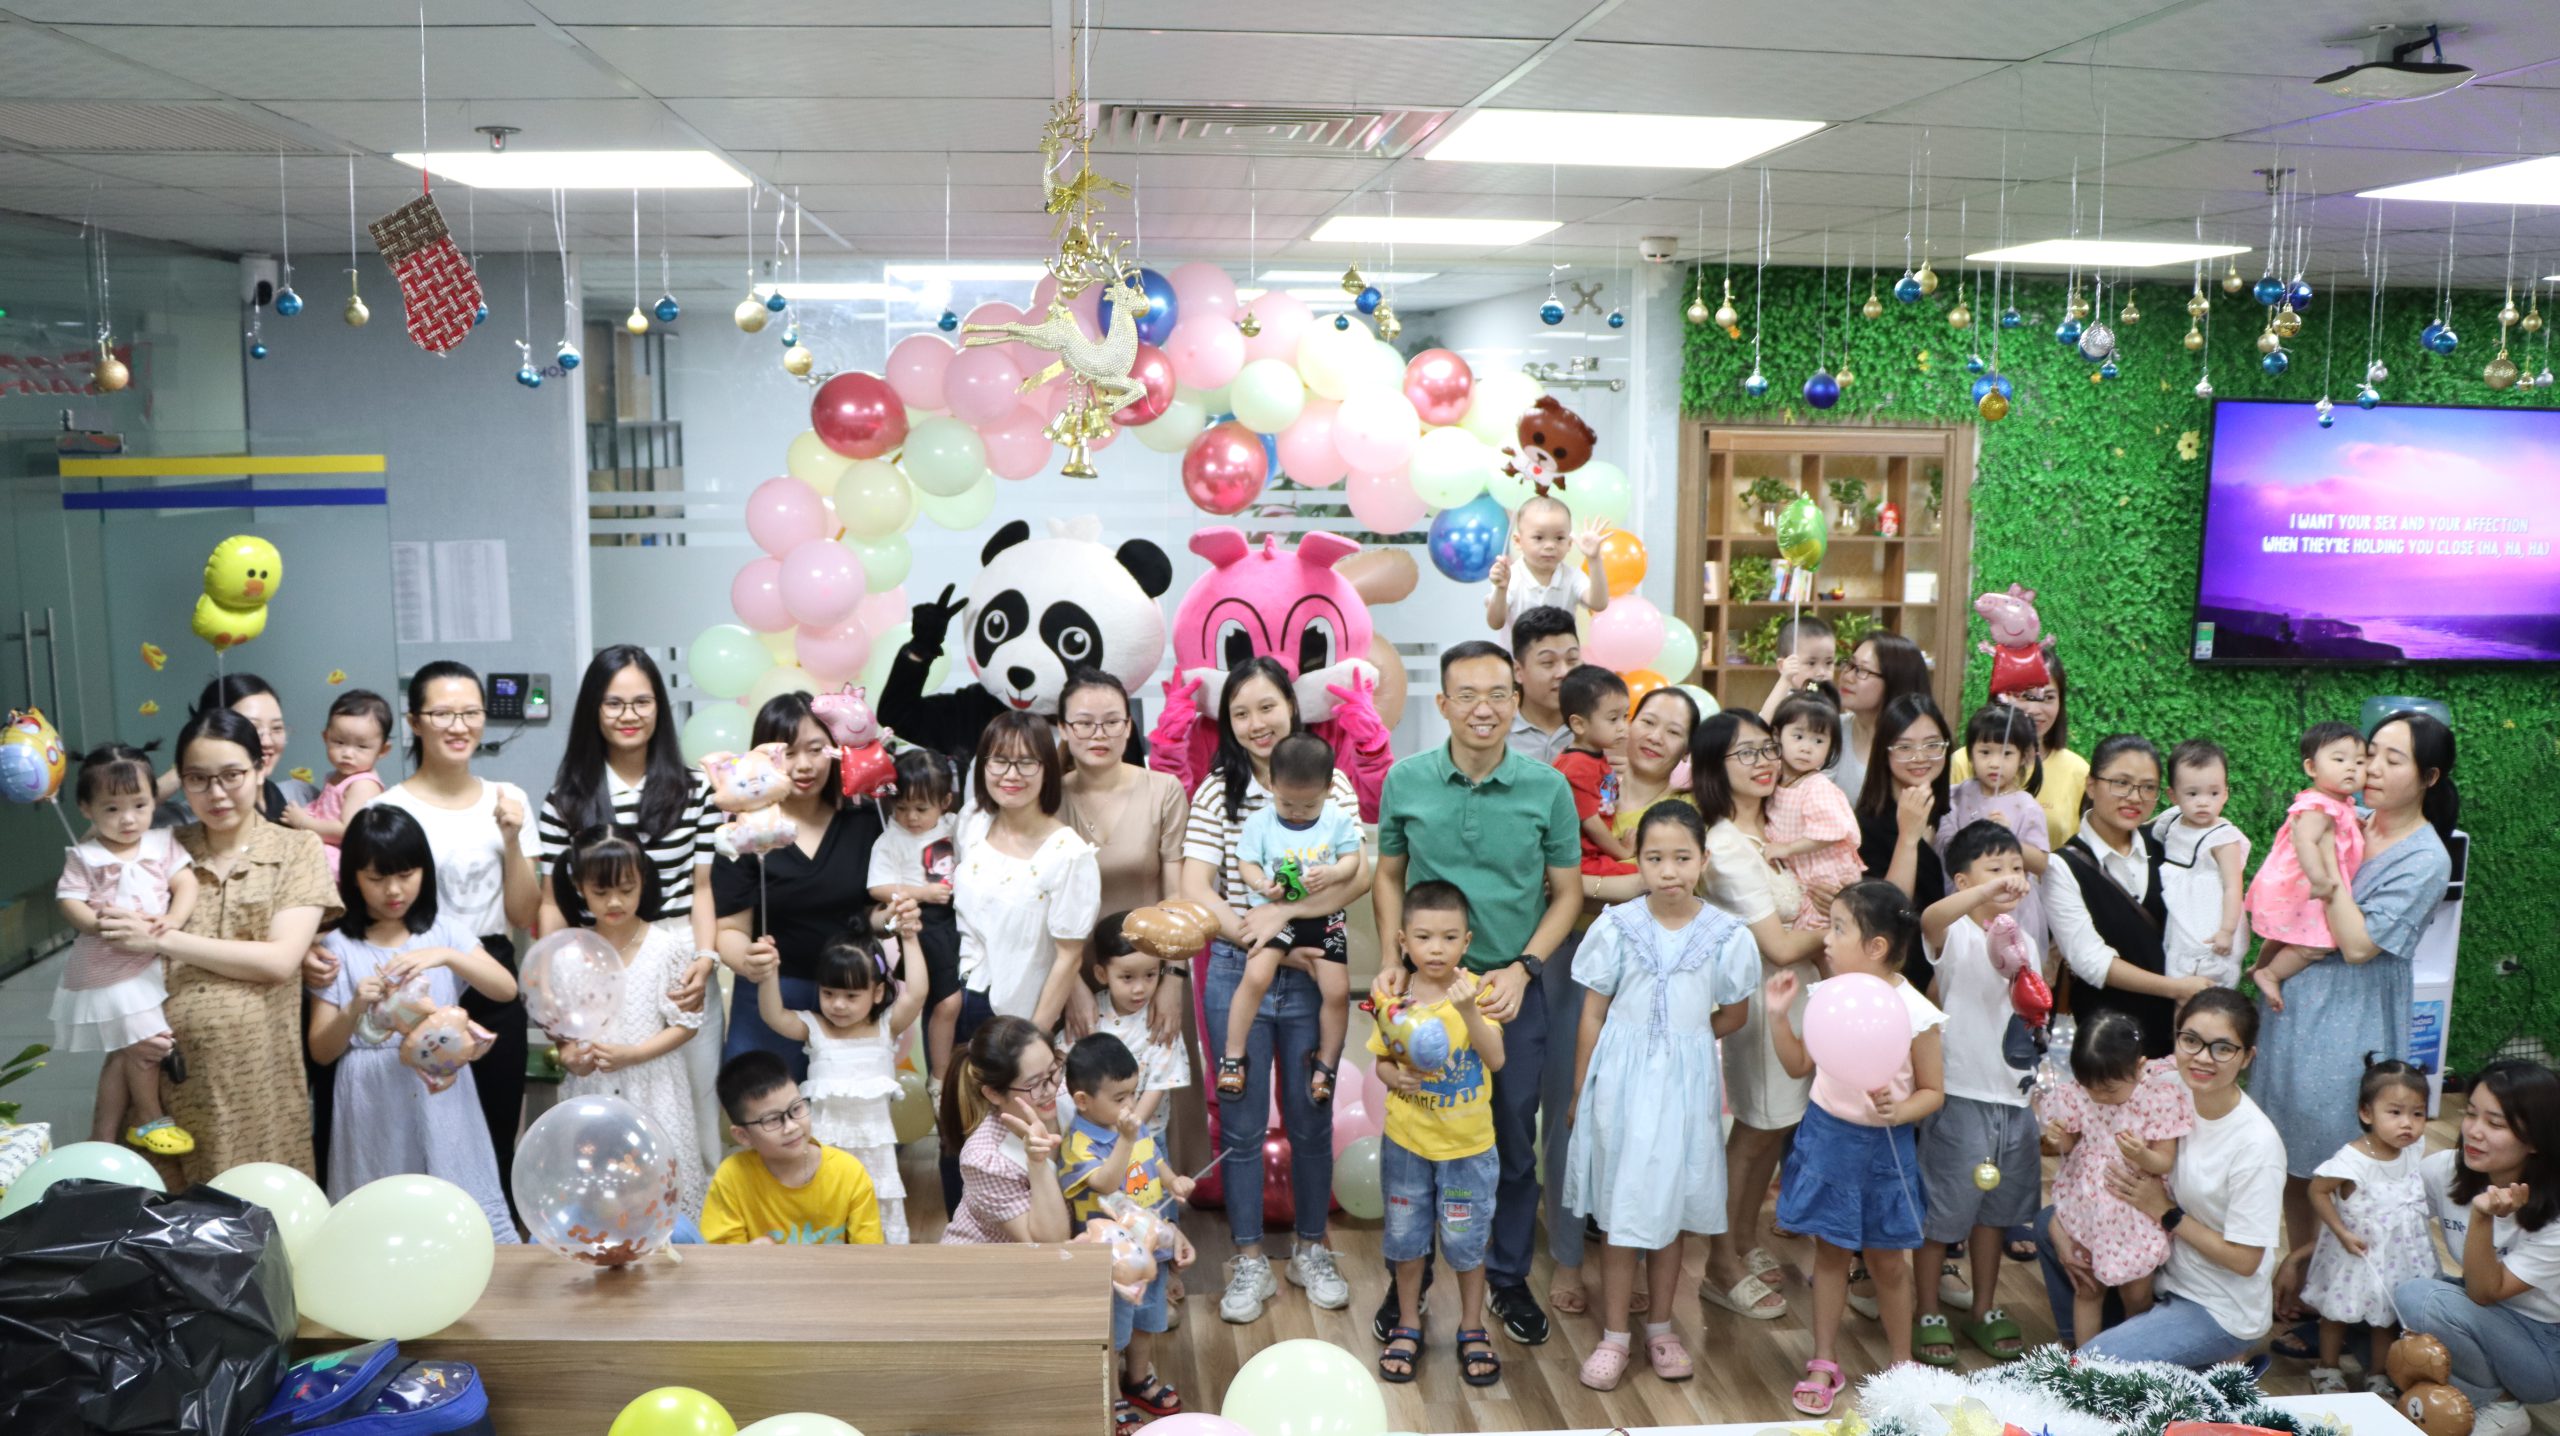 Happy Children’s Day: A Joyful Celebration At Macsara’s Office